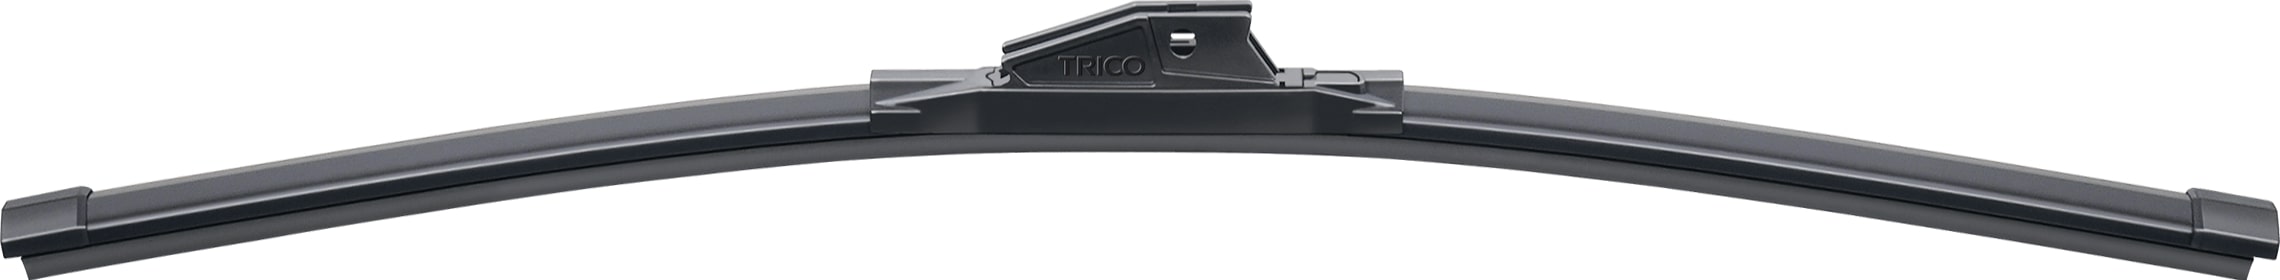 TRICO Wiper Blades - 35 Series ICE 18"